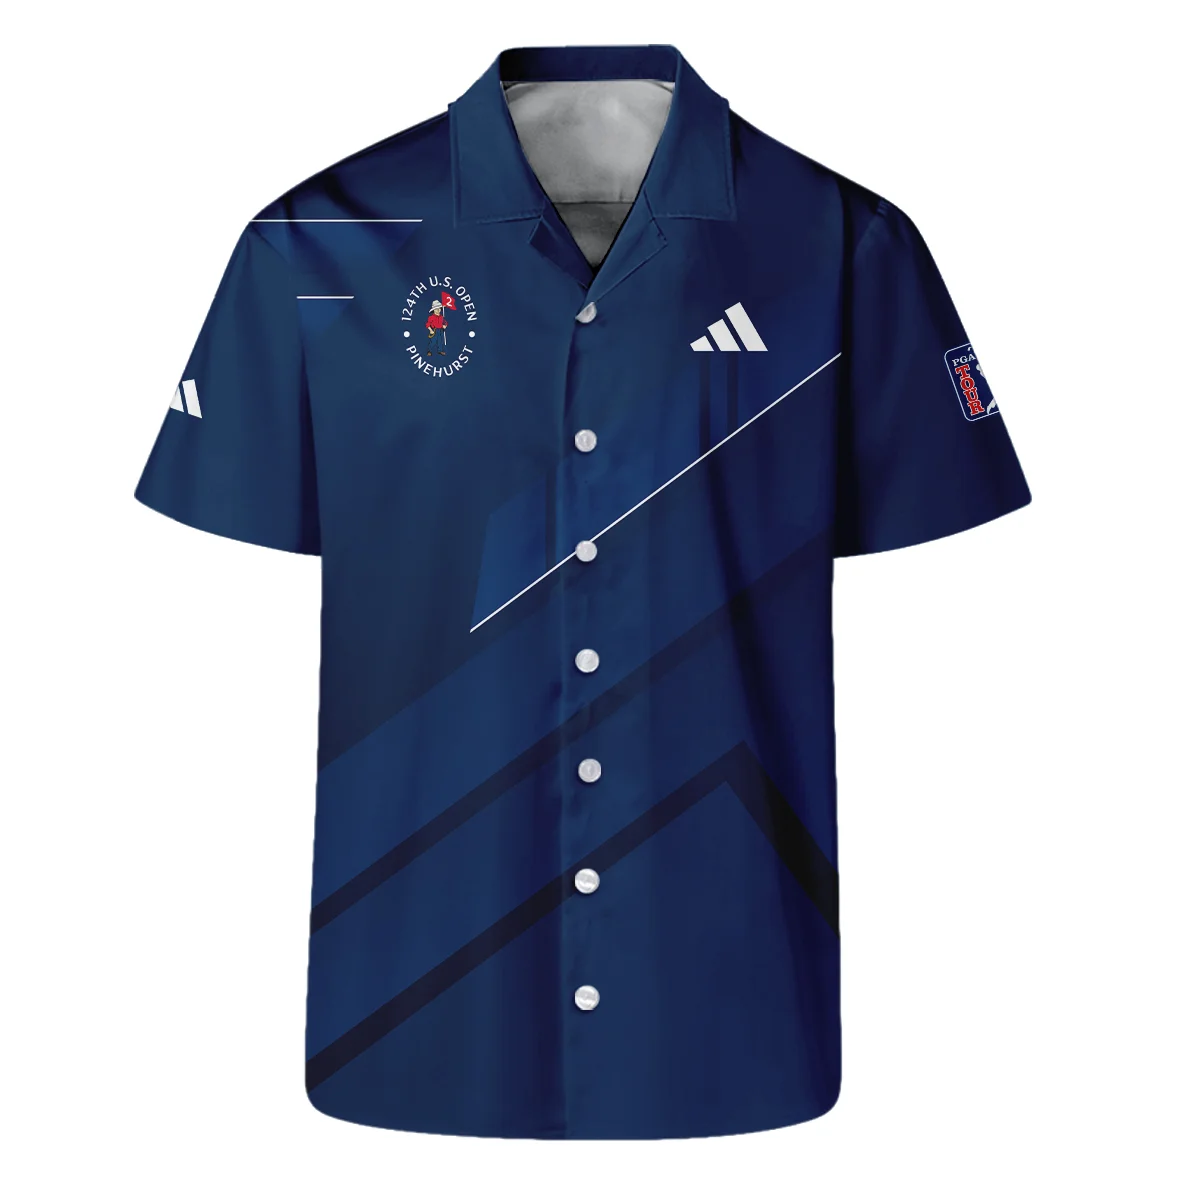 Adidas 124th U.S. Open Pinehurst Blue Gradient With White Straight Line Zipper Hoodie Shirt Style Classic Zipper Hoodie Shirt